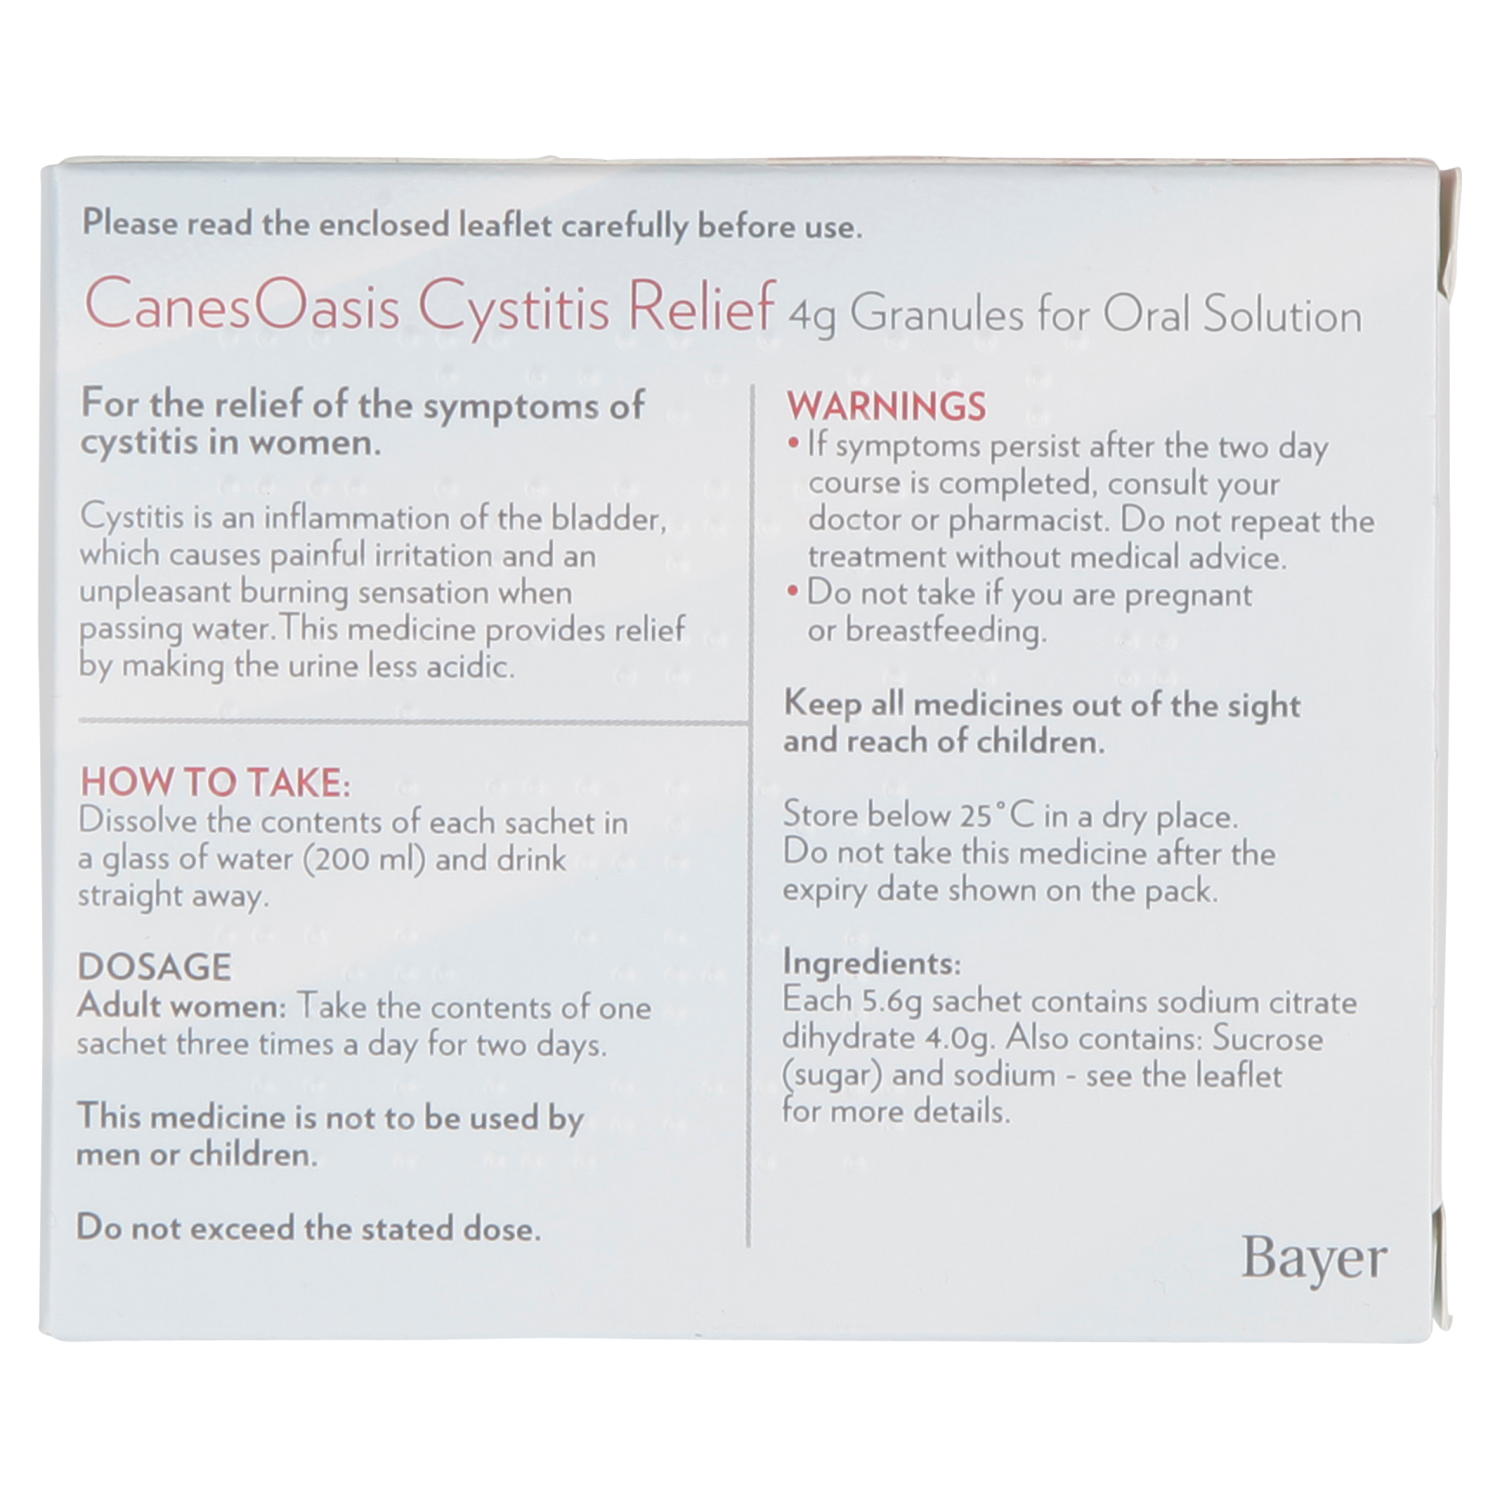 CanesOasis Cystitis Relief Sachets